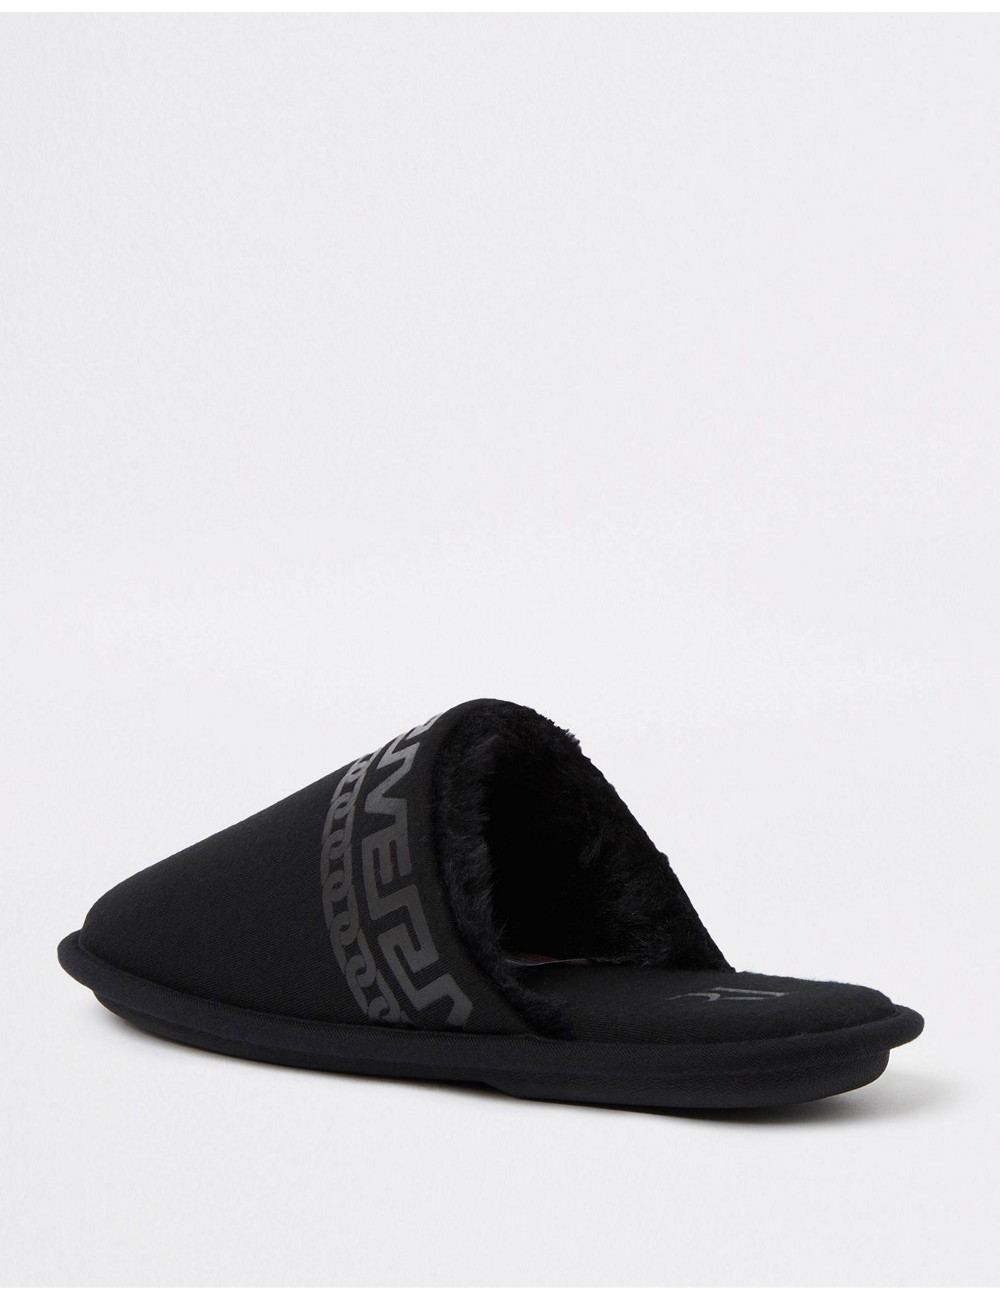 River Island slippers in black